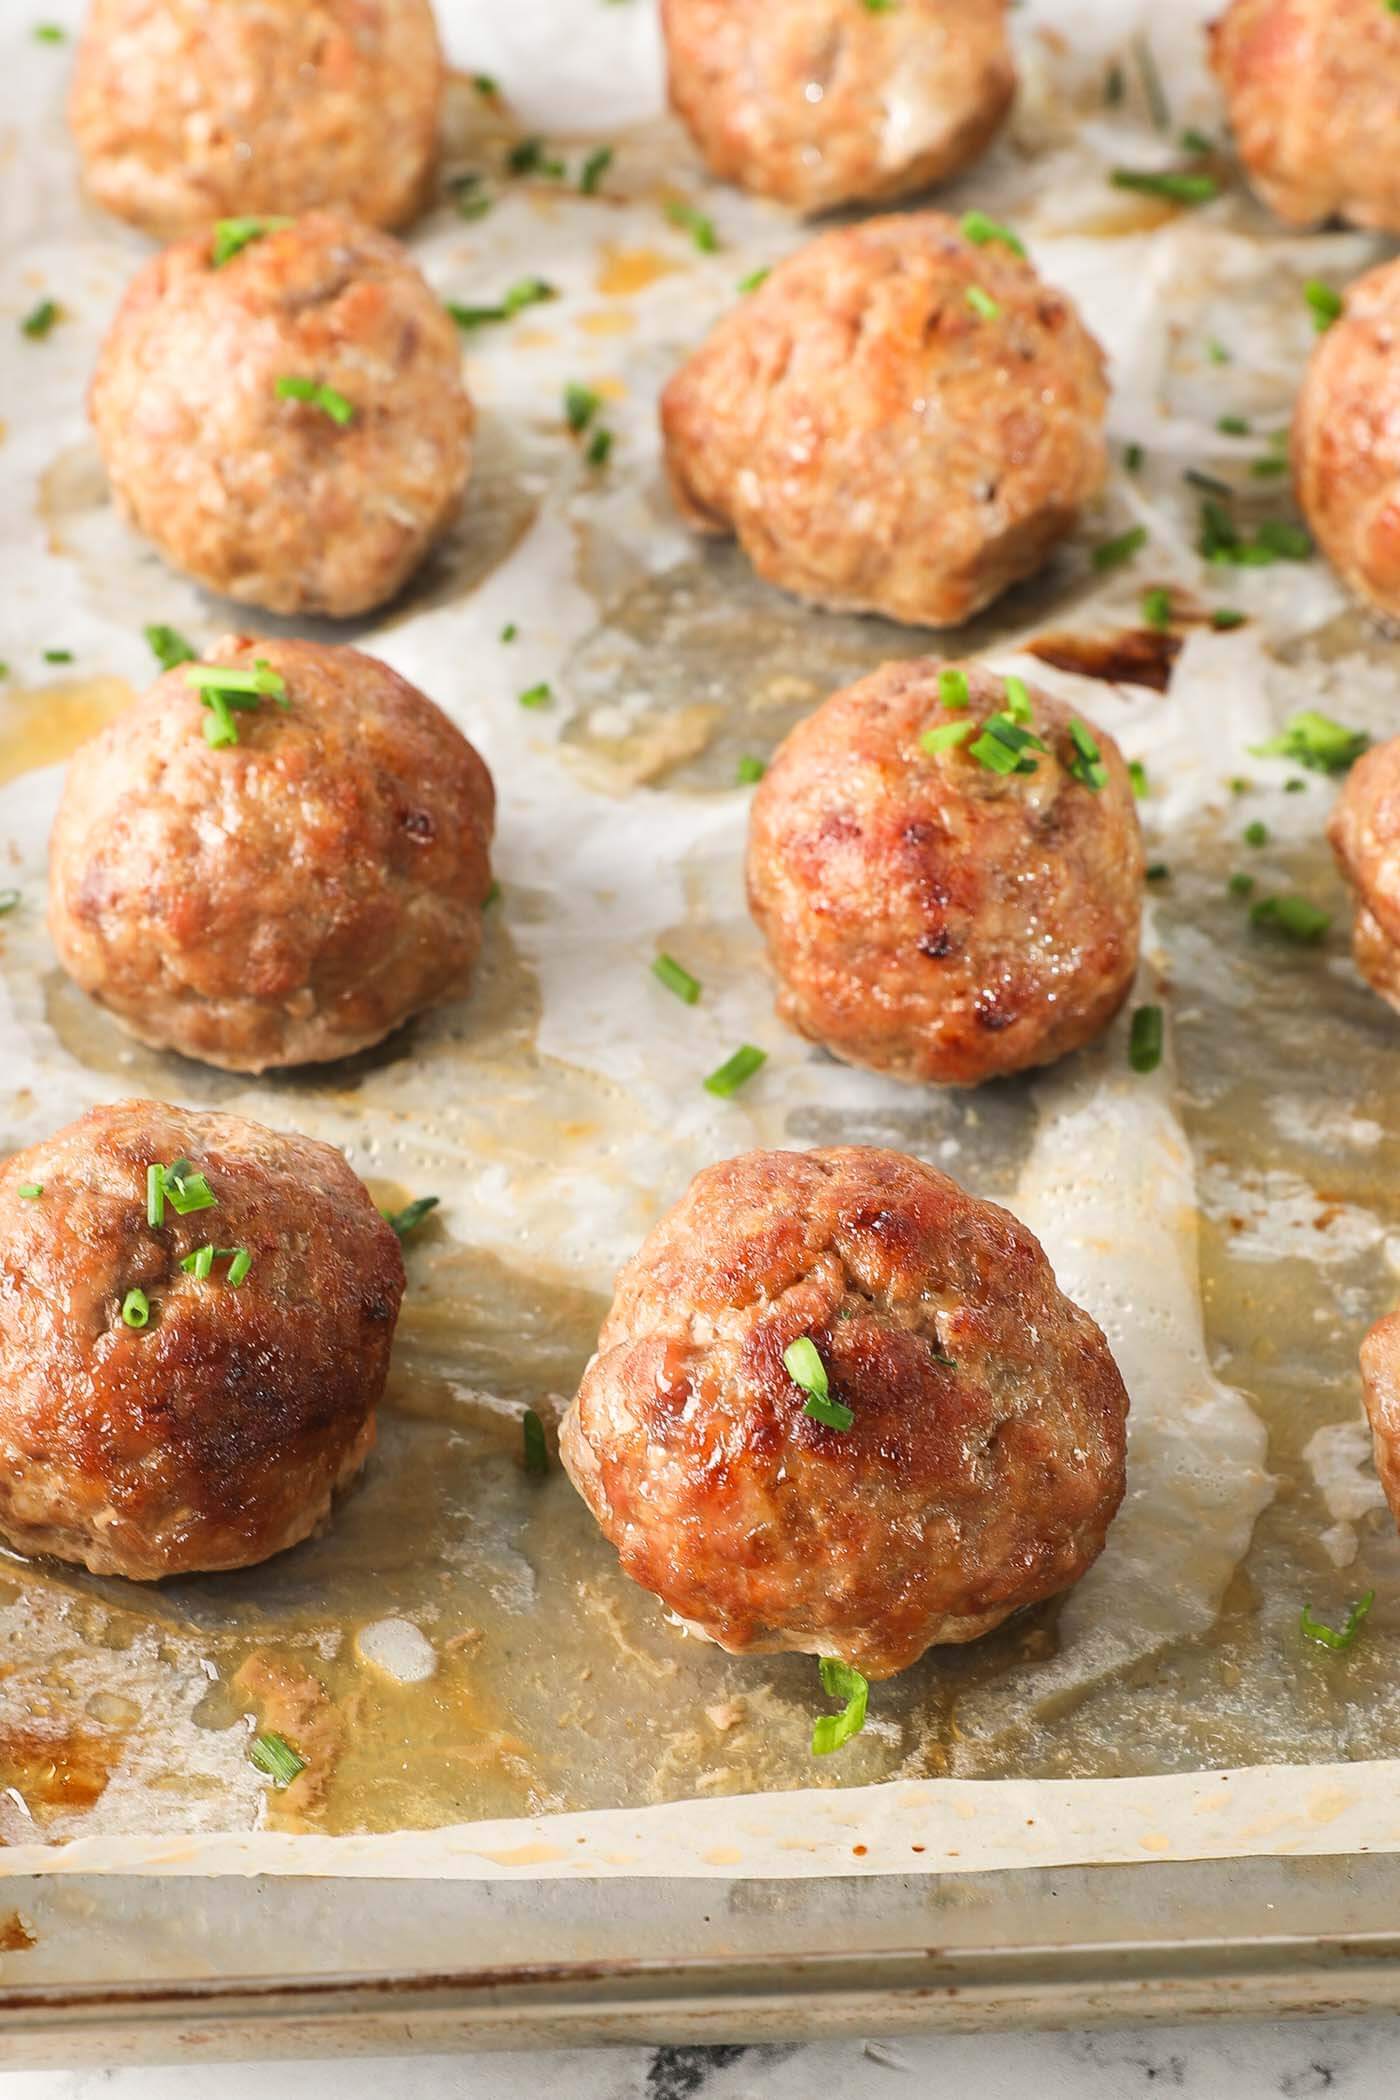 Close up image of baked ground pork meatballs